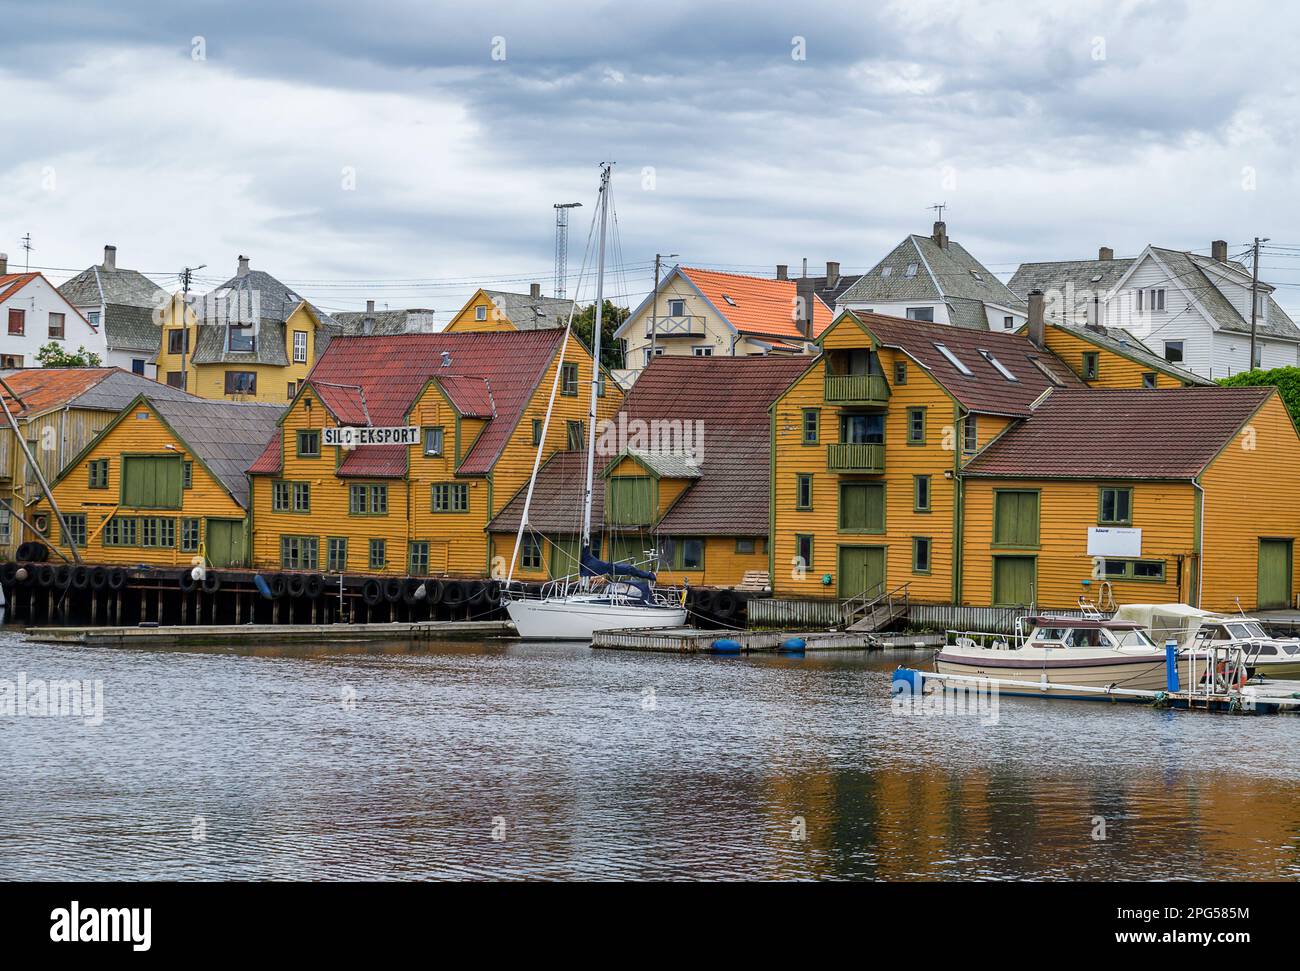 City view of downtown Haugesund, Norway Stock Photo